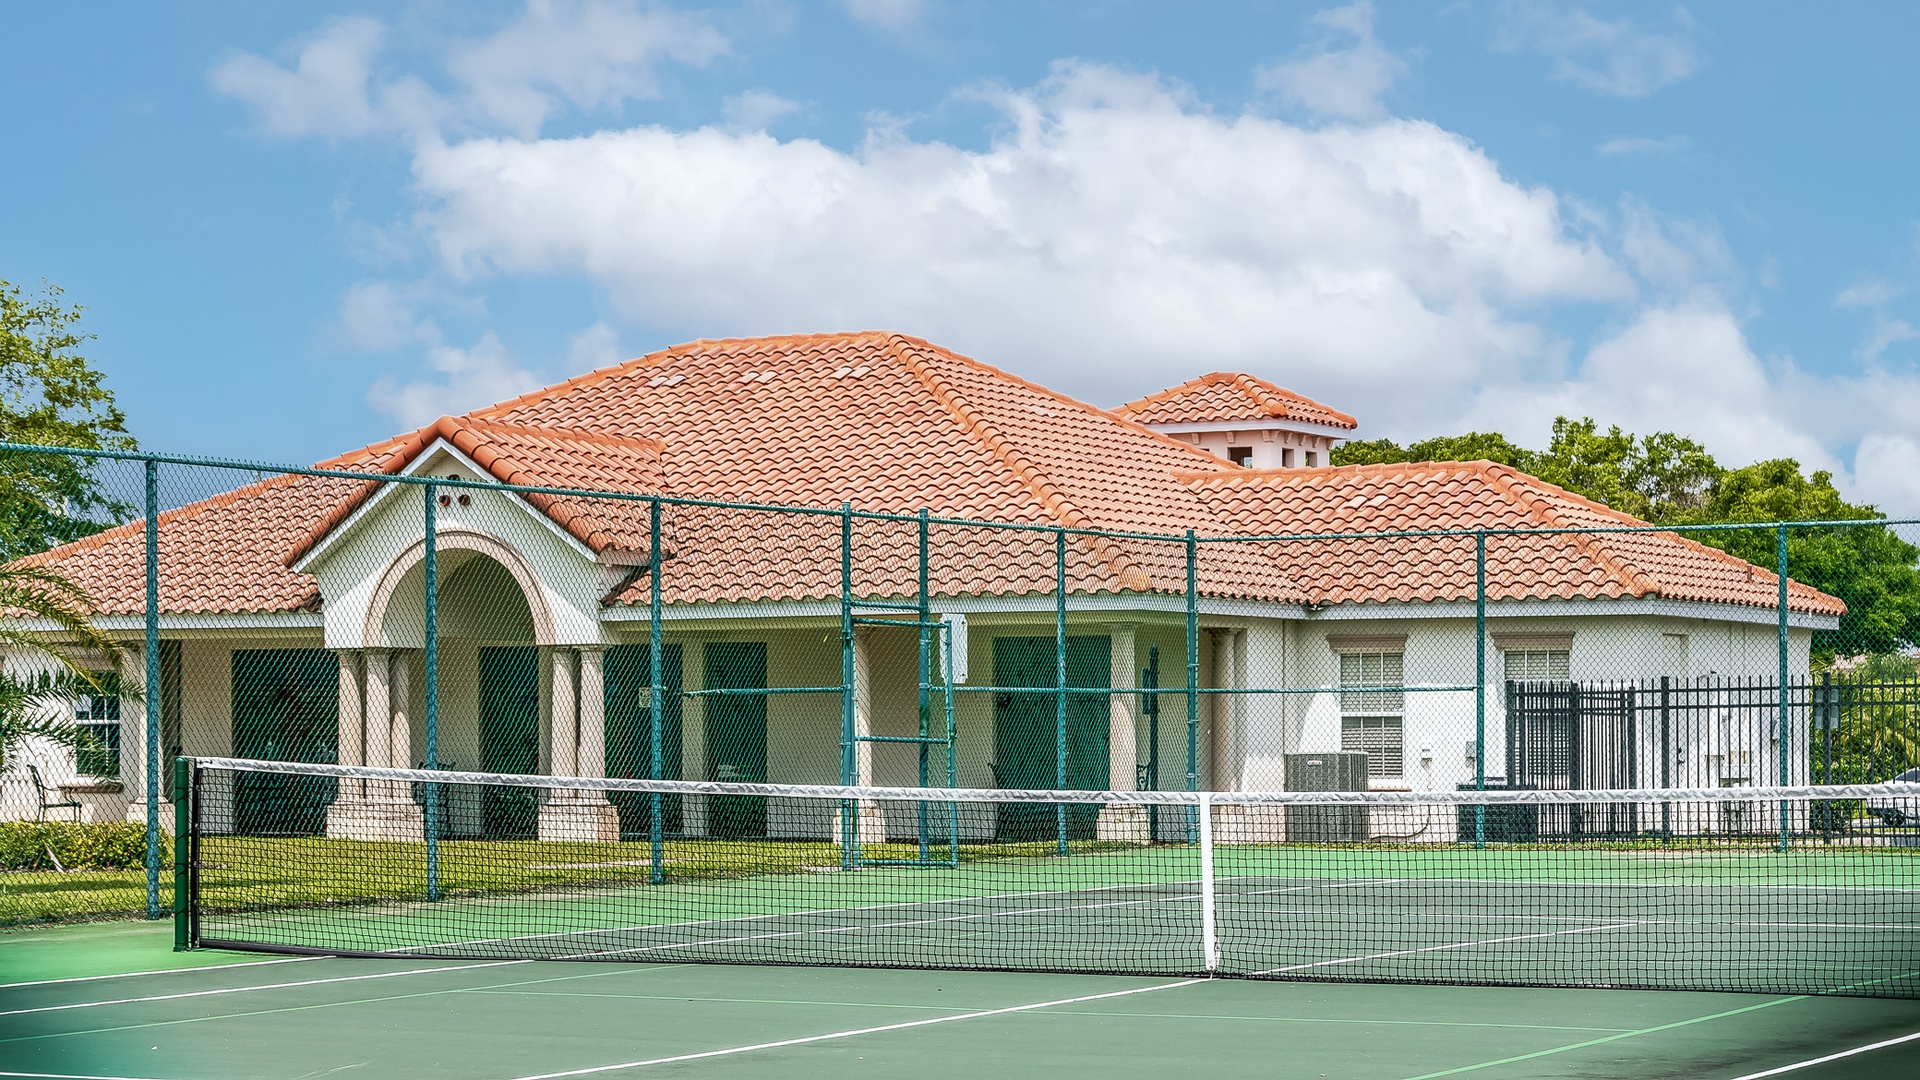 Community center tennis courts